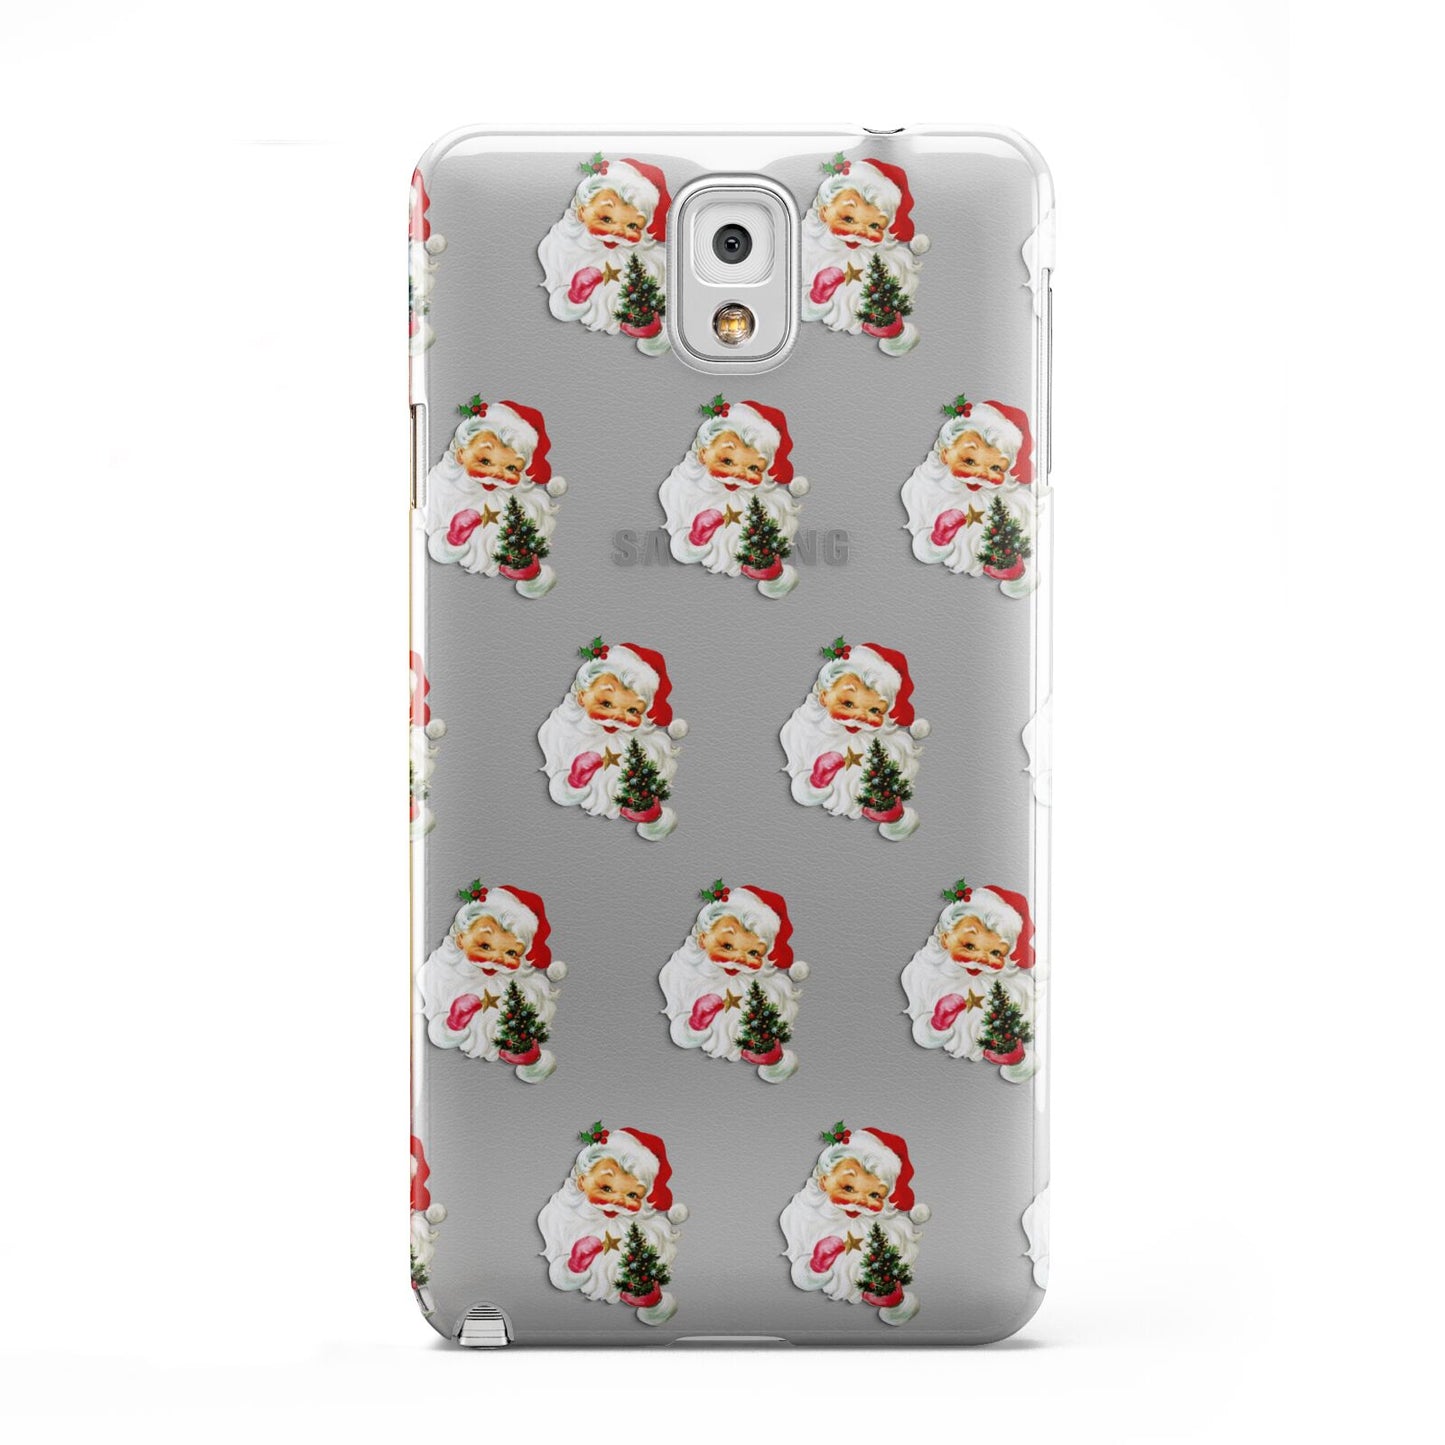 Retro Santa Face Samsung Galaxy Note 3 Case